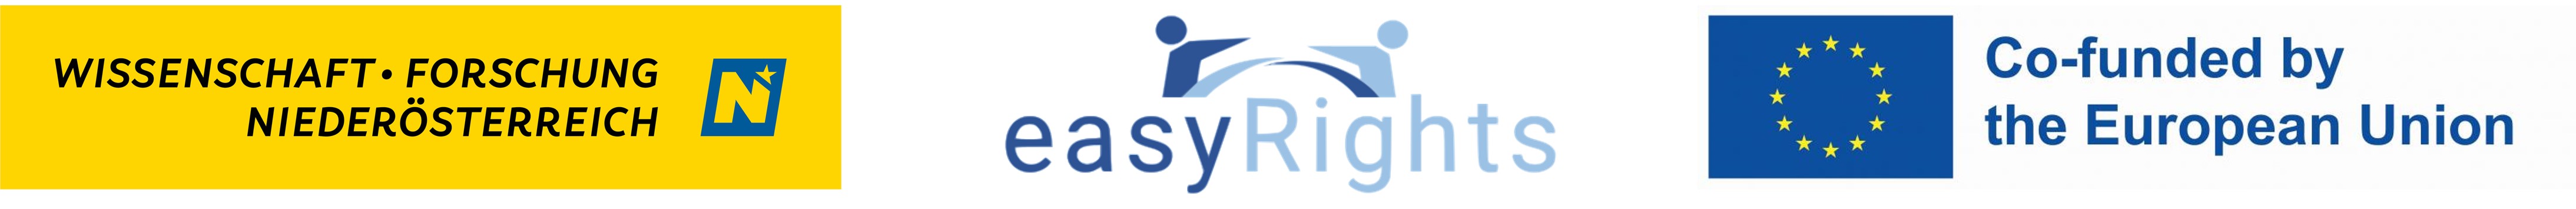 Logo-Land Noe_easy rights_cofunded by EU